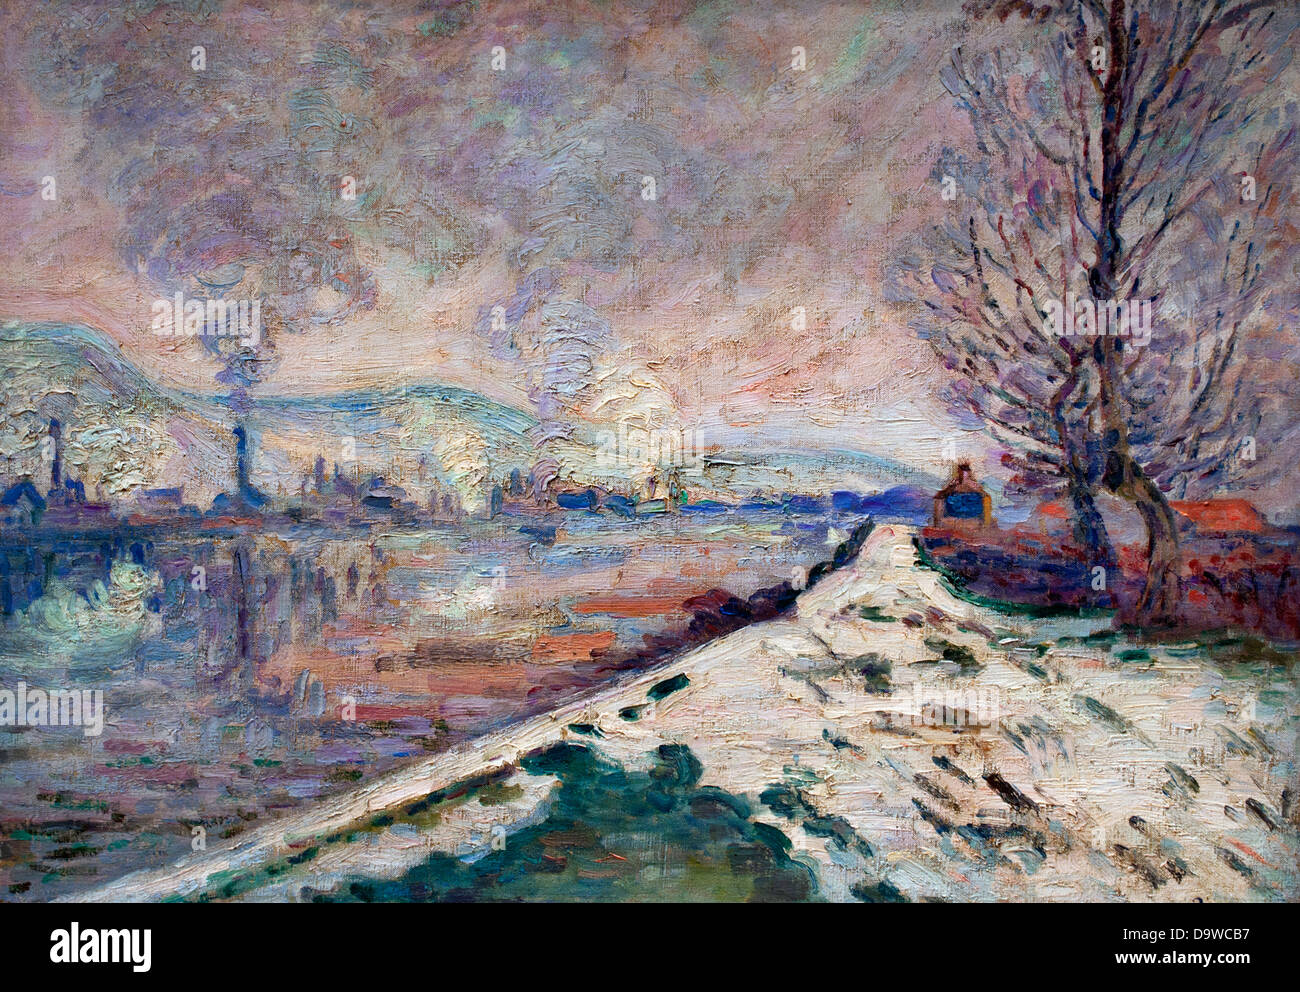 Neige Fondante ein Rouen - Schneeschmelze in Rouen 1900 Armand Guillaumin 1841-1927 Frankreich Stockfoto